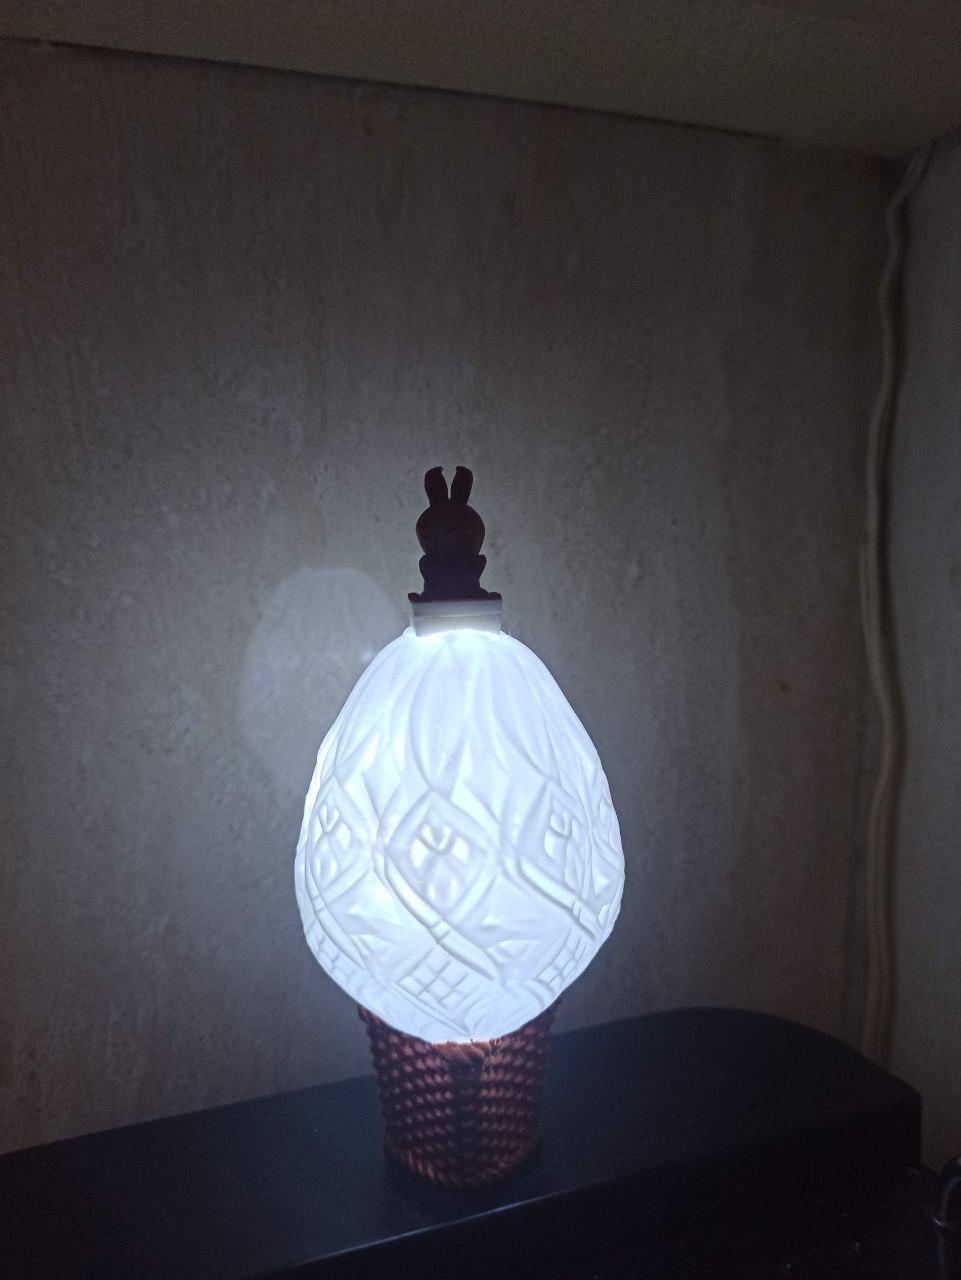 Remix Lamp Easter Egg #SpringThangs - Lights on! - 3d model